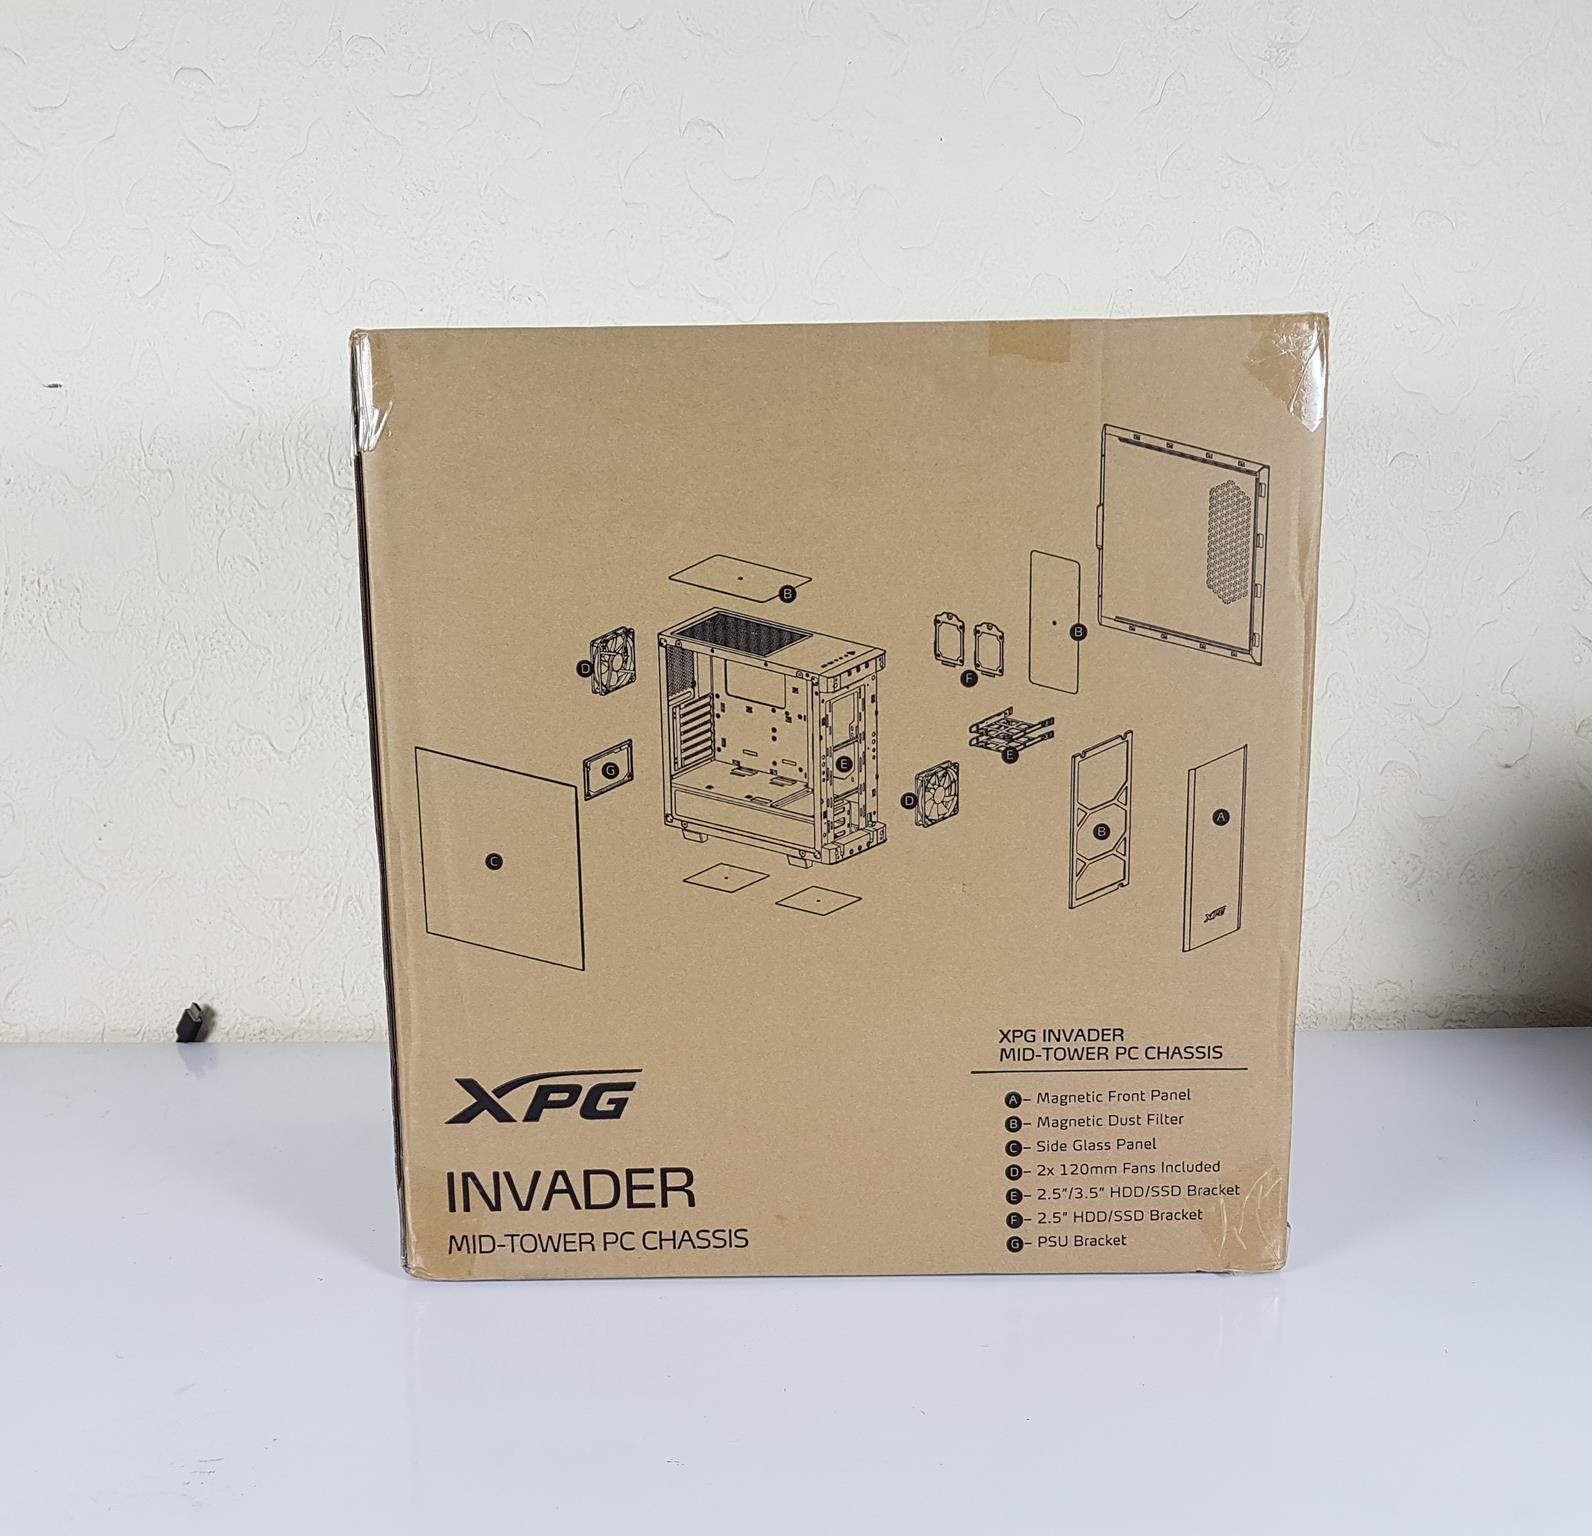 INVADER Packaging Side Box